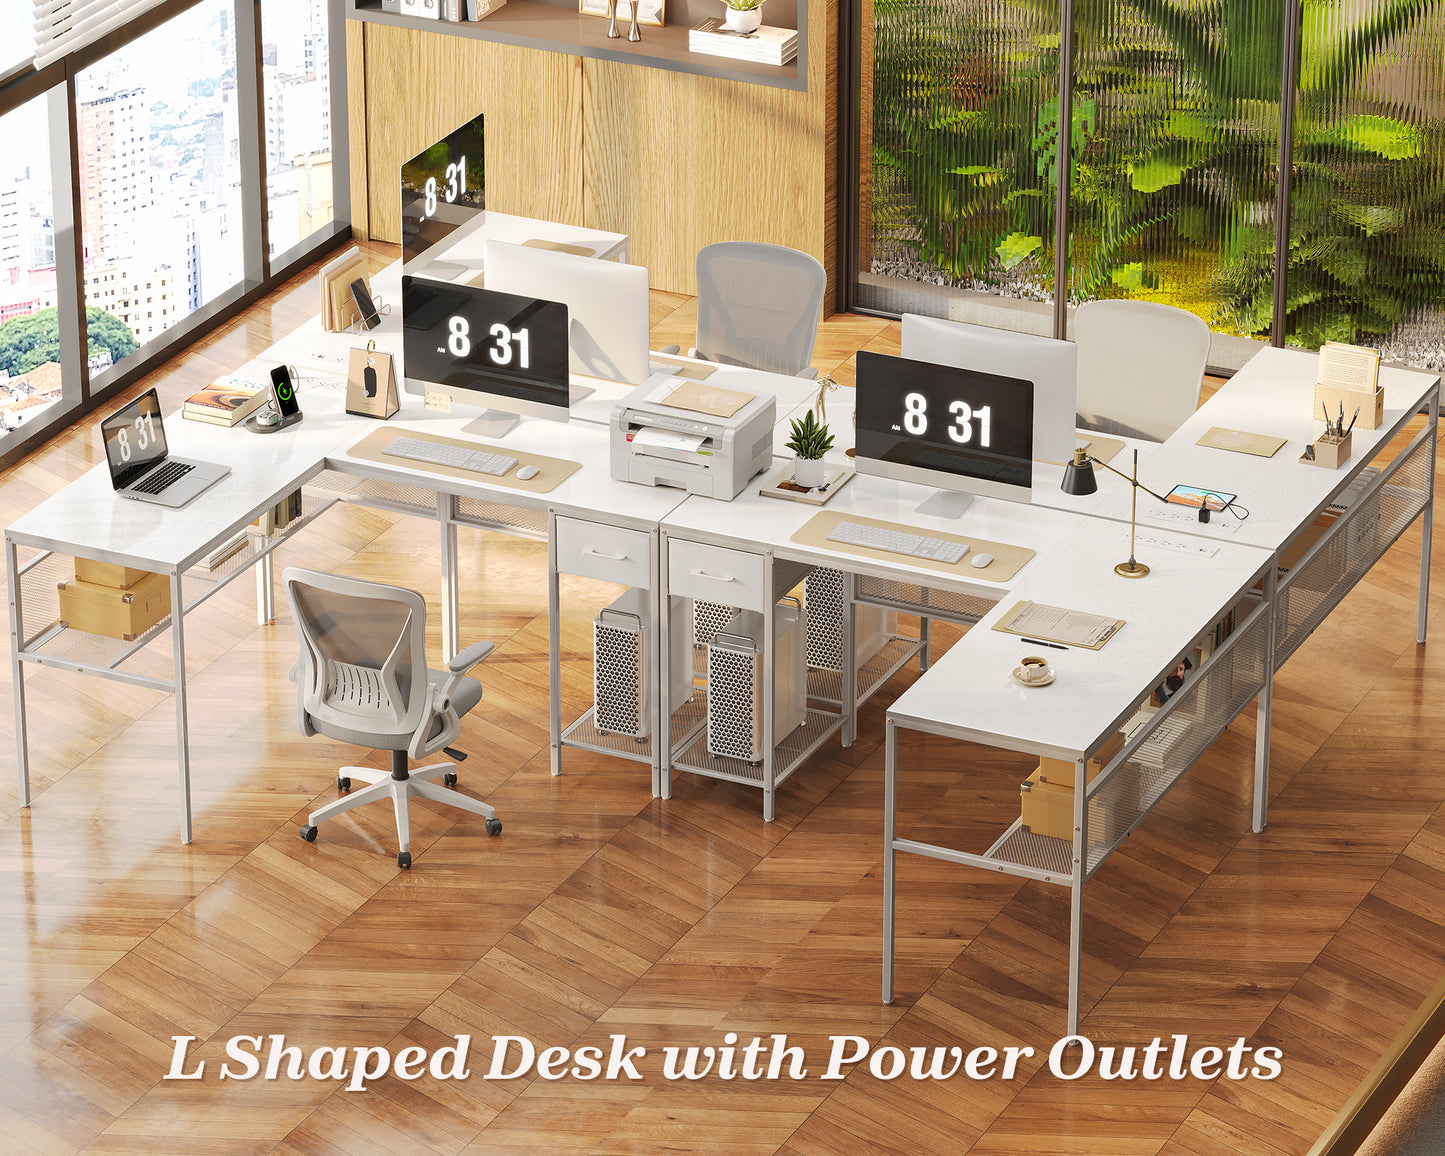 SUPERJARE L Shaped Desk with Power Outlets, Computer Desk with Drawer, Reversible Corner Desk with Grid Storage Bookshelf, Home Office Desk, White